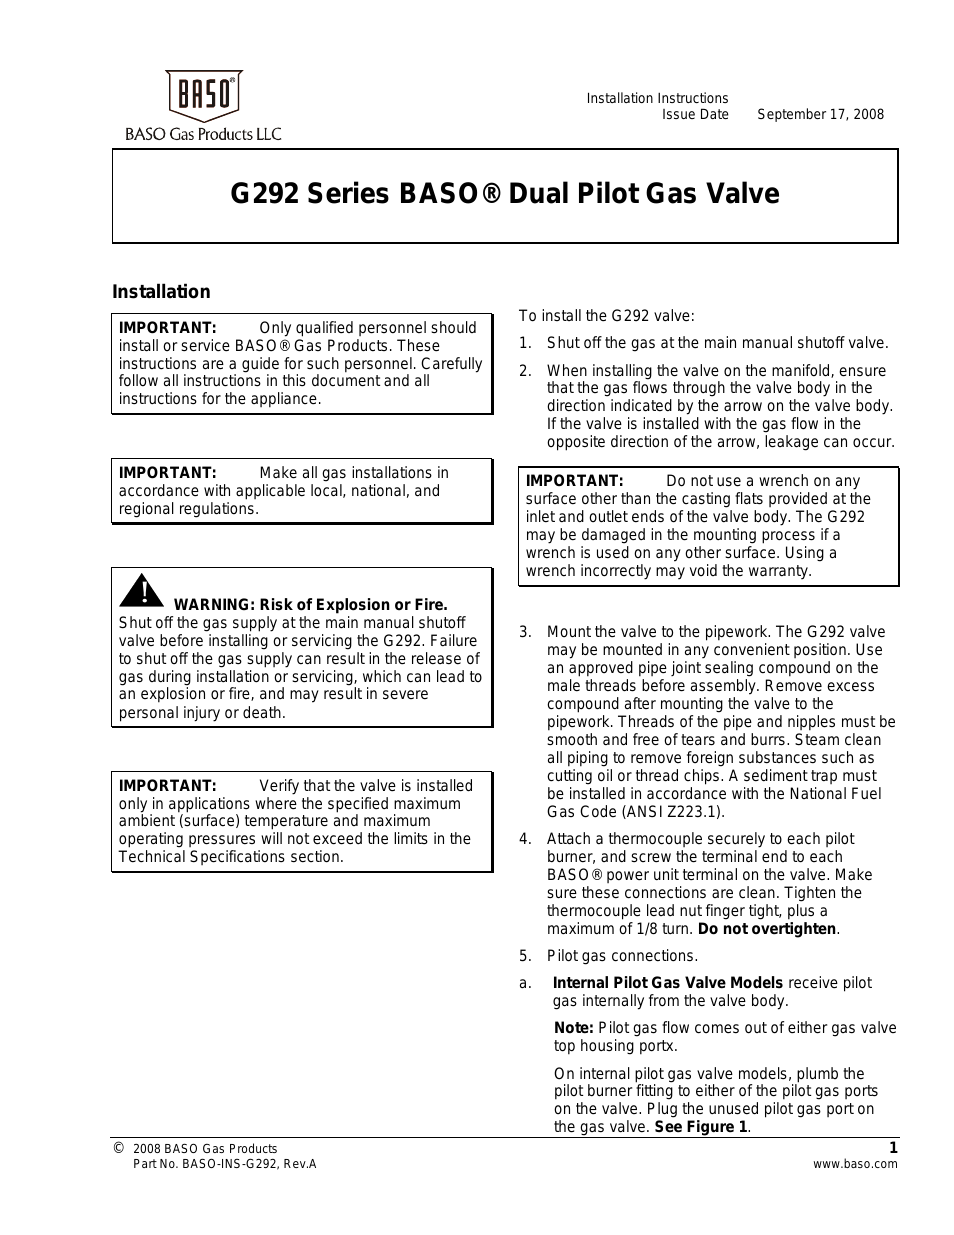 G292 Series Dual Pilot Gas Valve